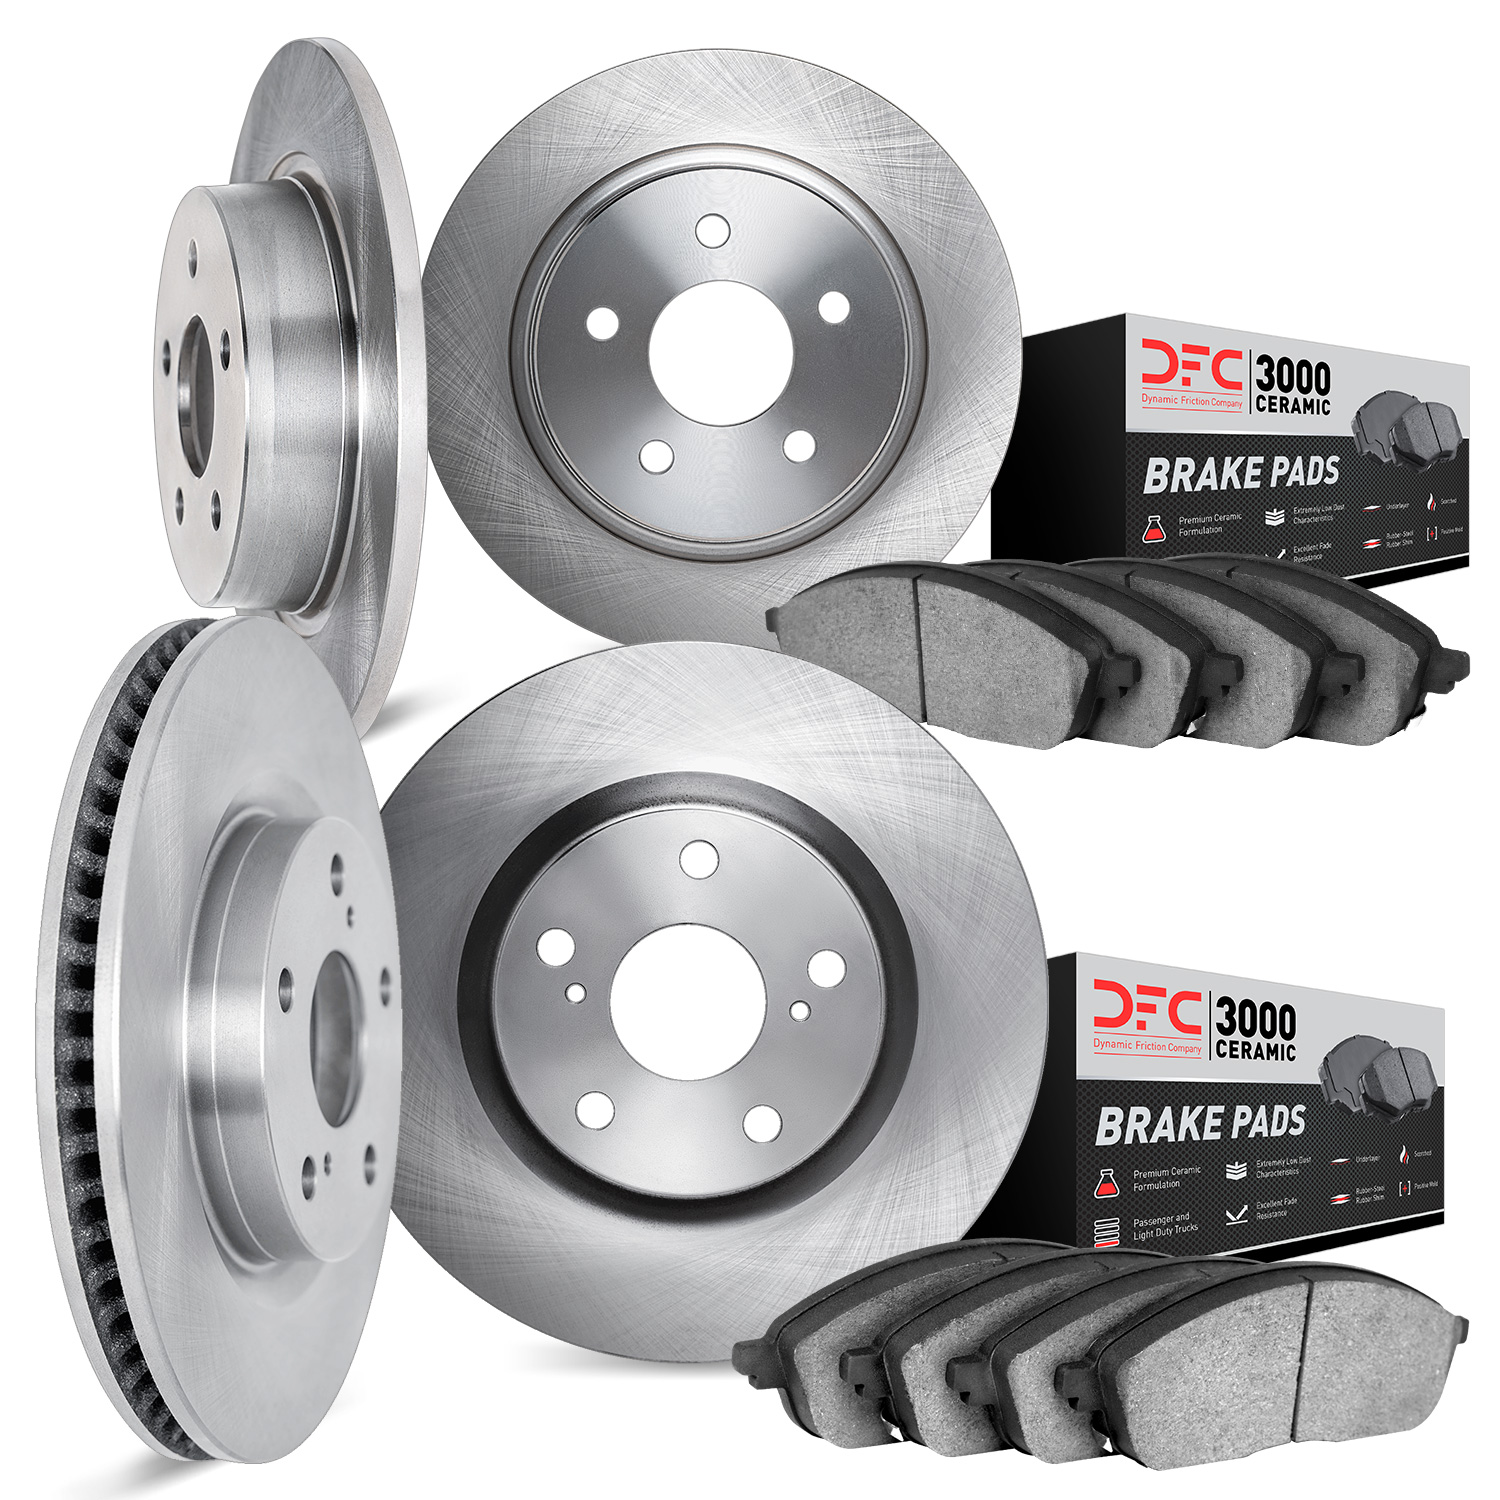 6304-59081 Brake Rotors with 3000-Series Ceramic Brake Pads Kit, 2014-2020 Acura/Honda, Position: Front and Rear